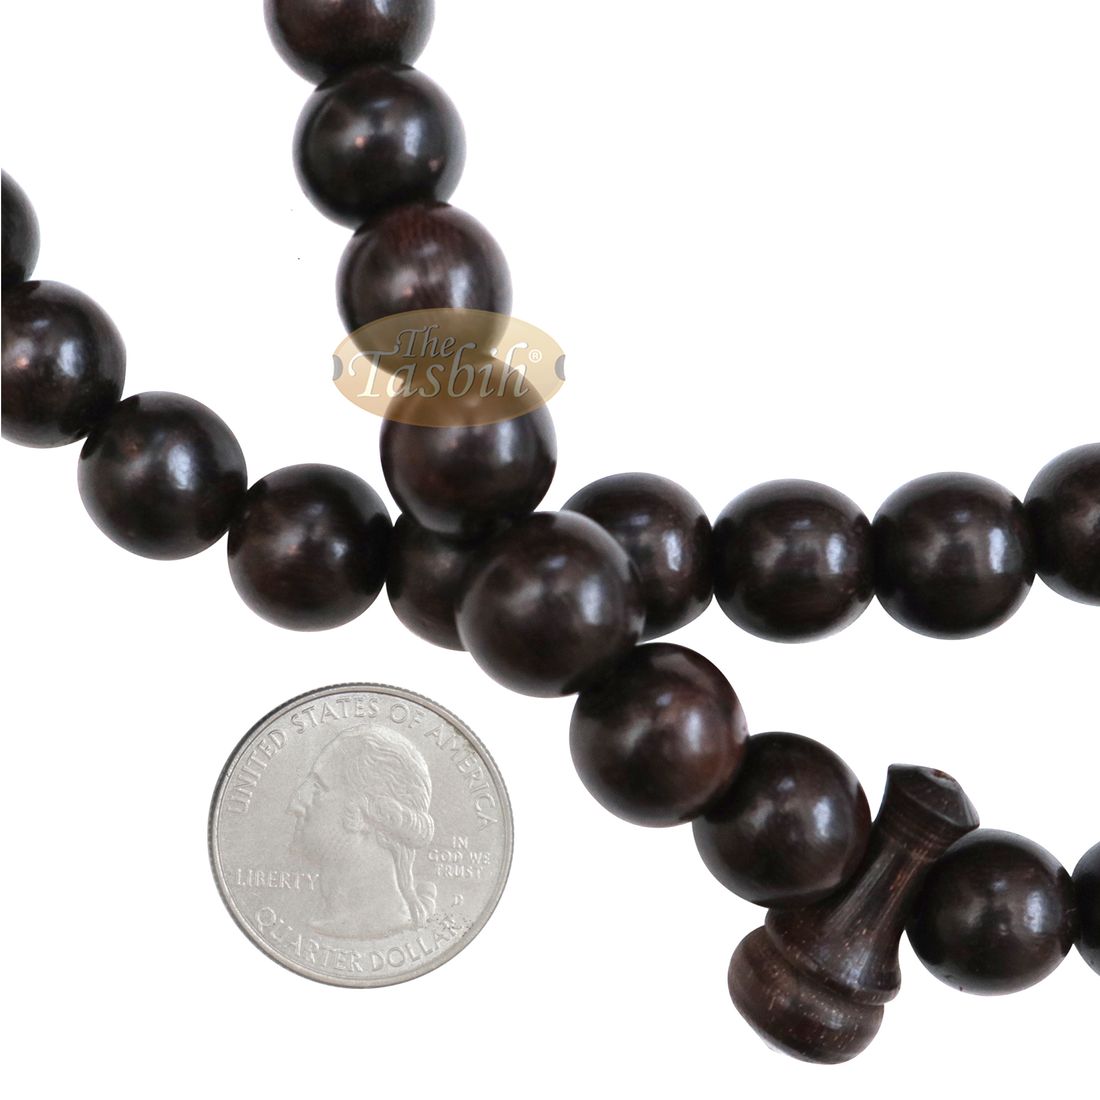 Unique Extra Large Dense Tamarind Wood Tasbih – Islamic Prayer Beads – 12mm Beads with Tassel